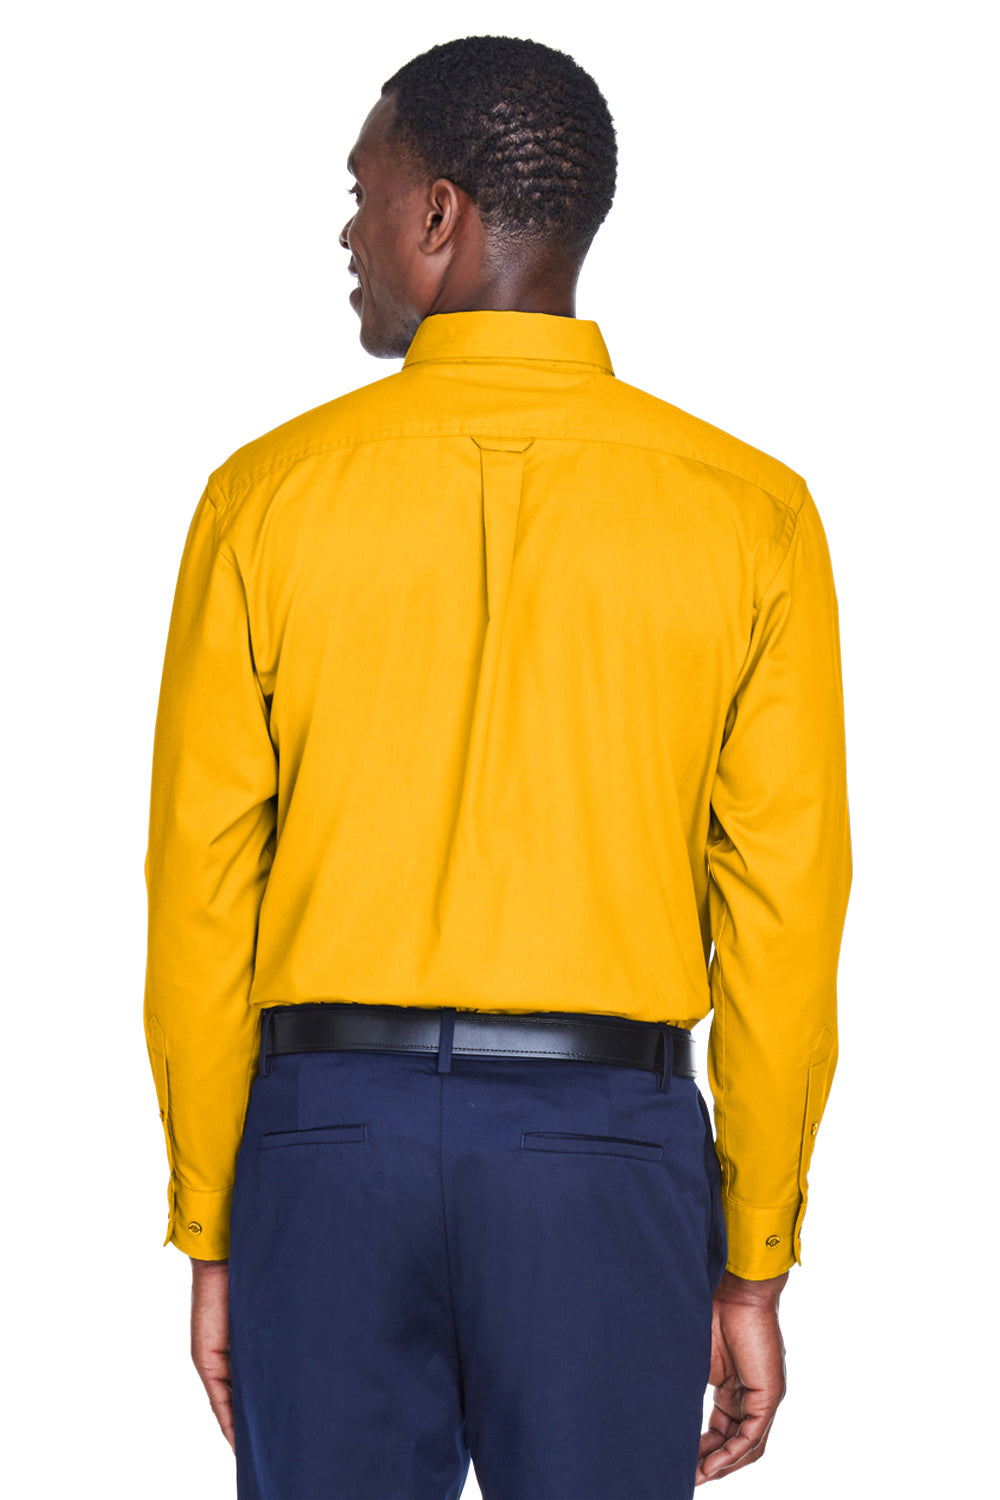 Harriton M500 Mens Wrinkle Resistant Long Sleeve Button Down Shirt w/ Pocket Gold Back